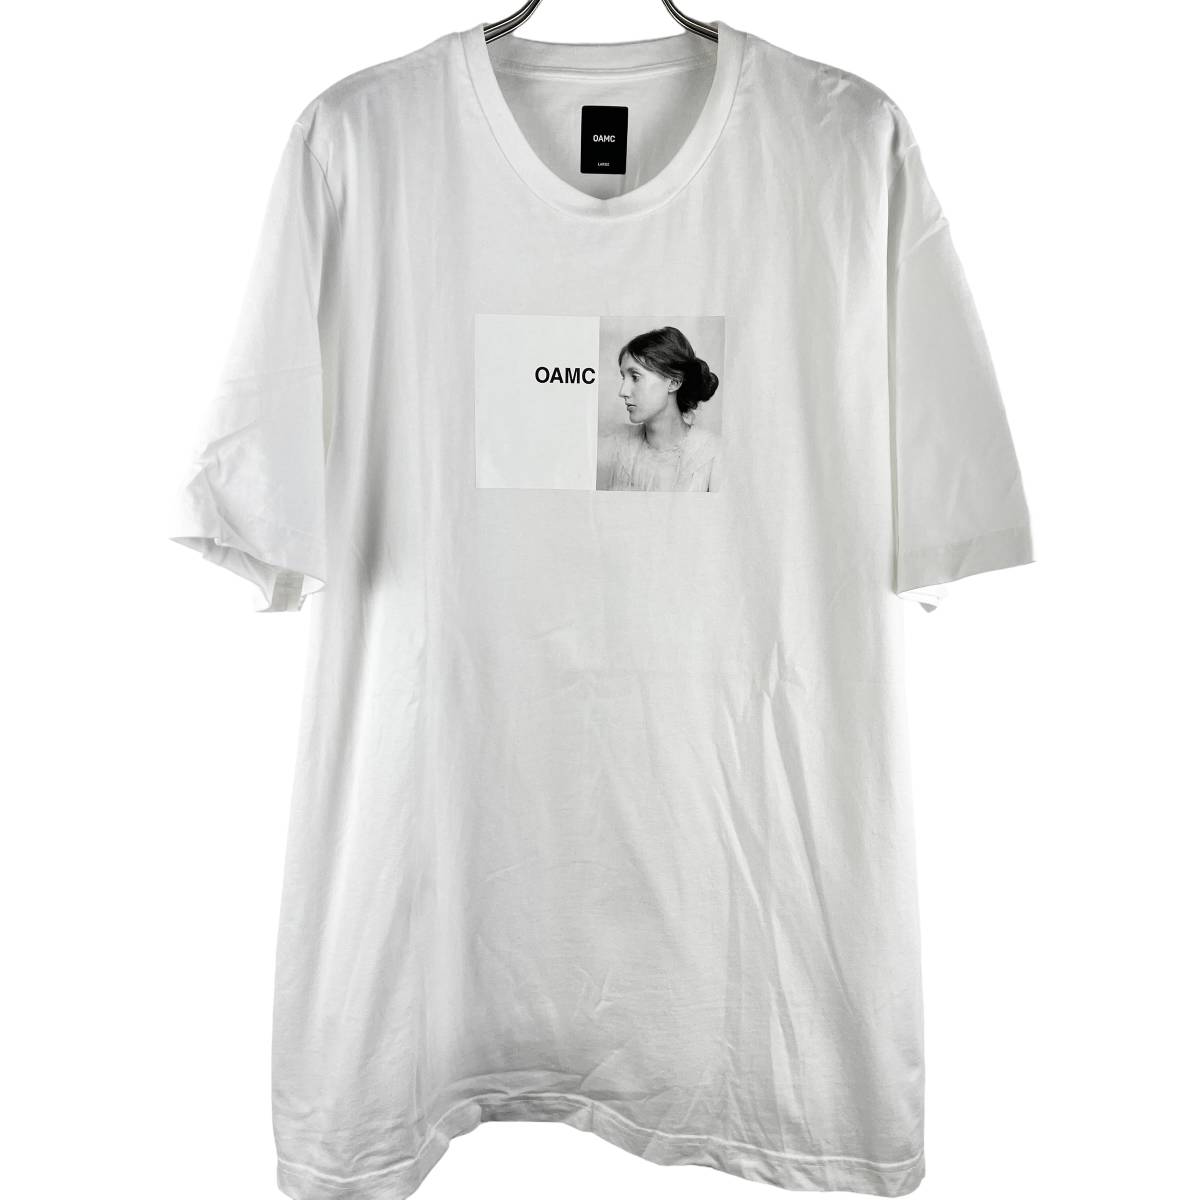 OAMC(オーエーエムシー) x Ronherman 10th anniversary T Shirt (white